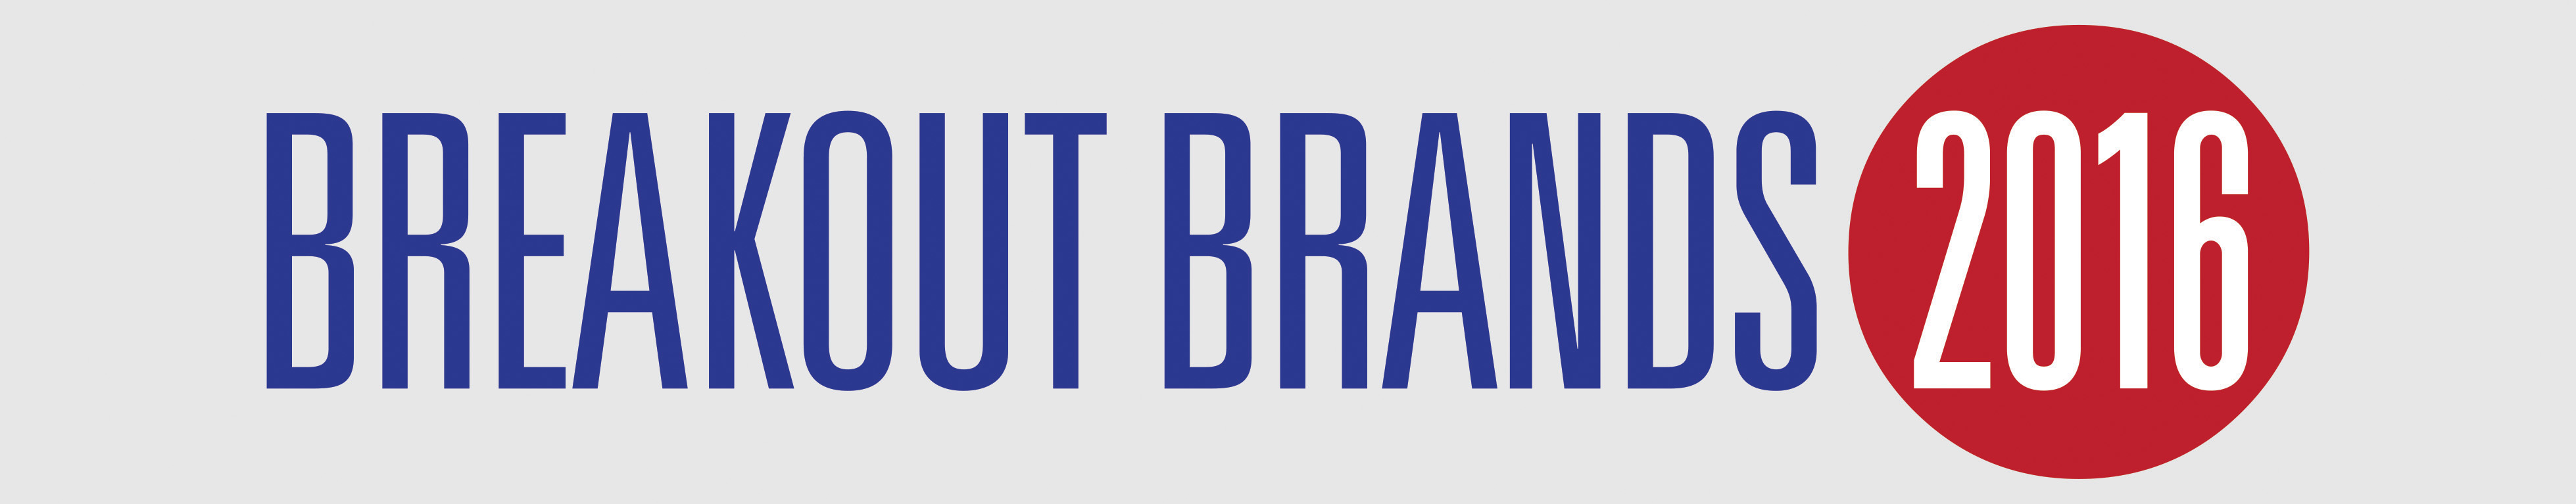 Breakout Brands 2016 banner